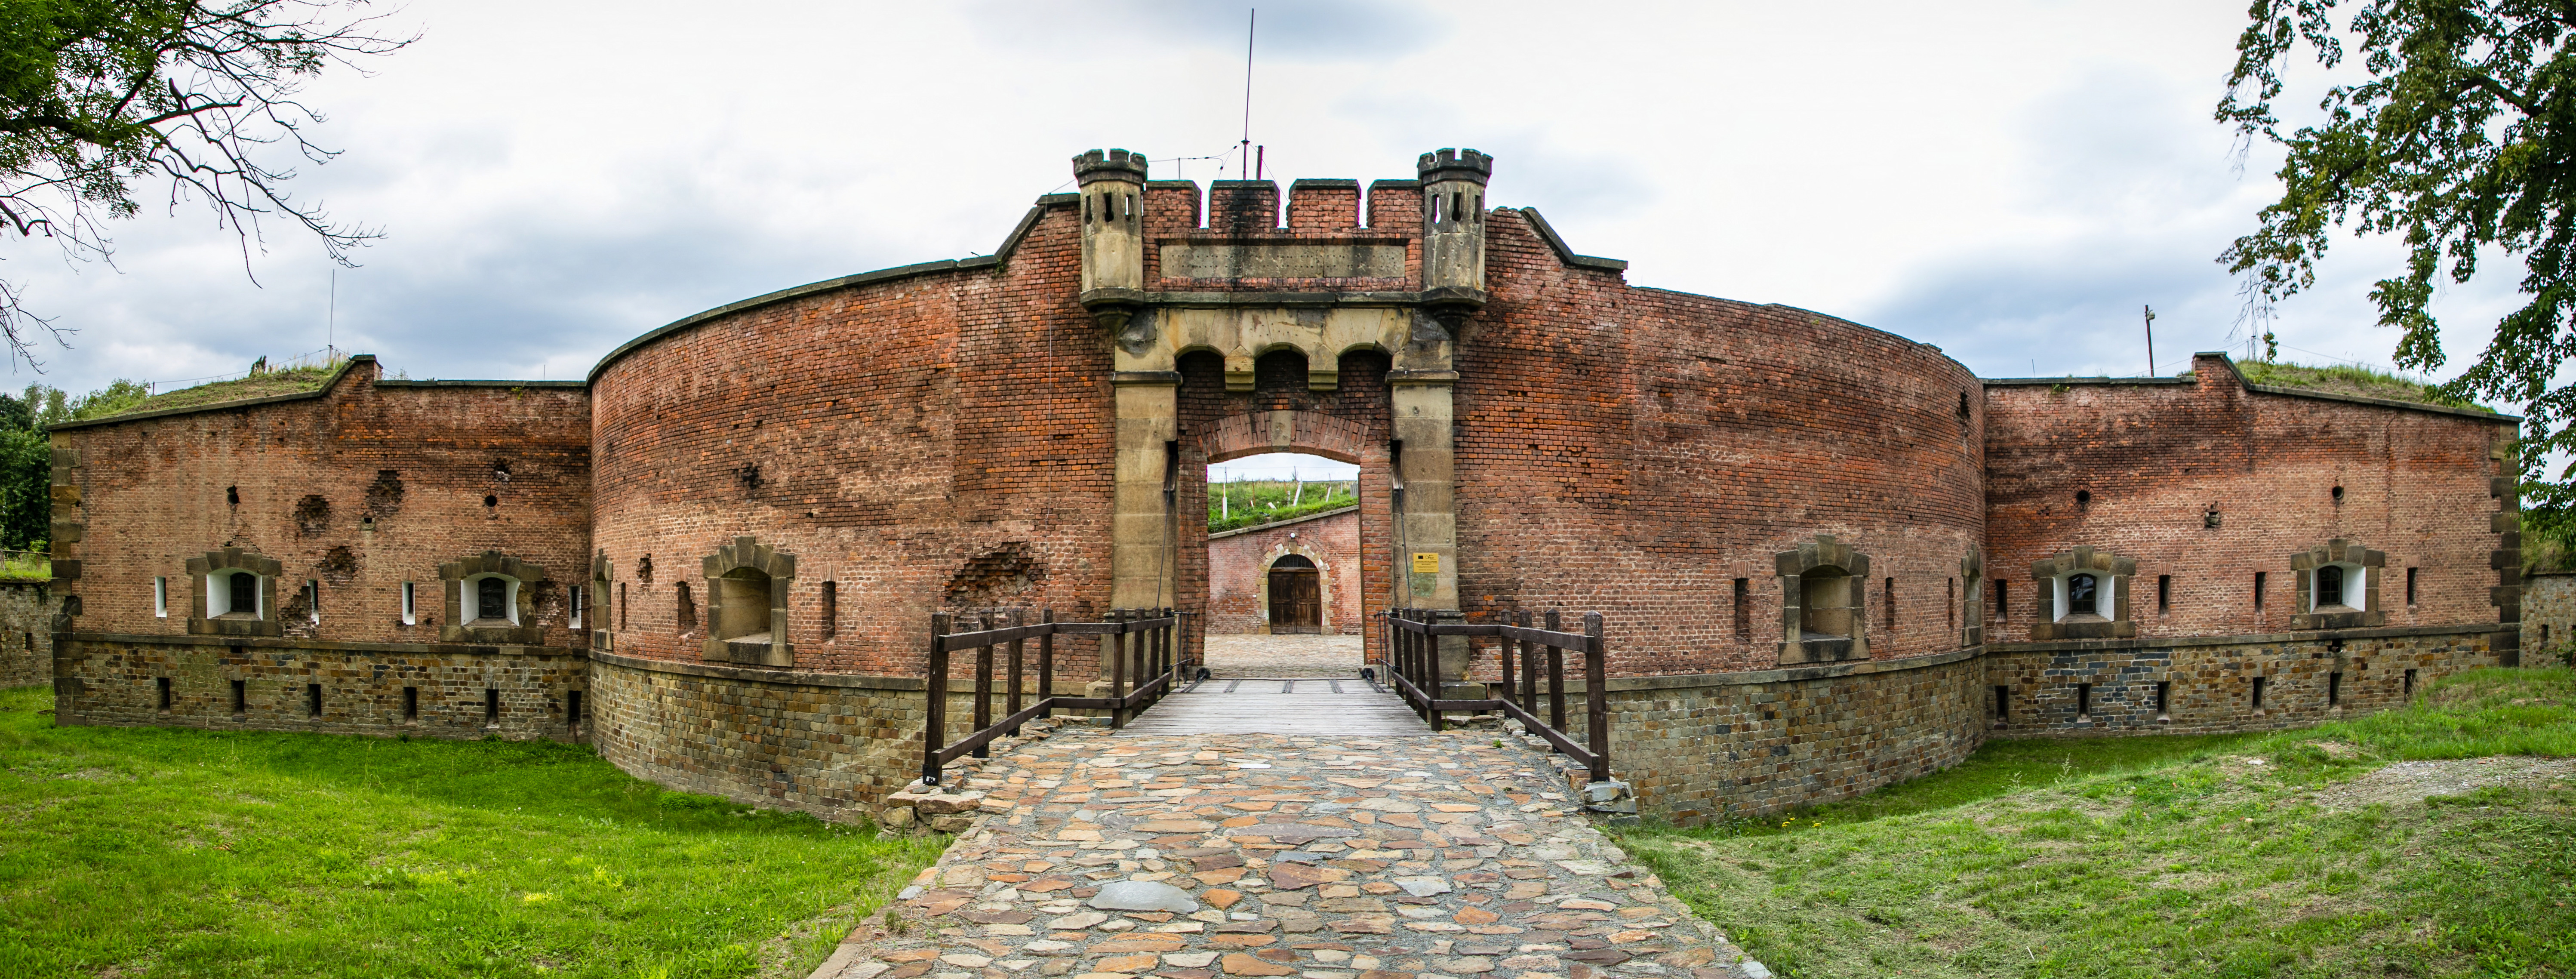 Olomouc Fort XXII 2